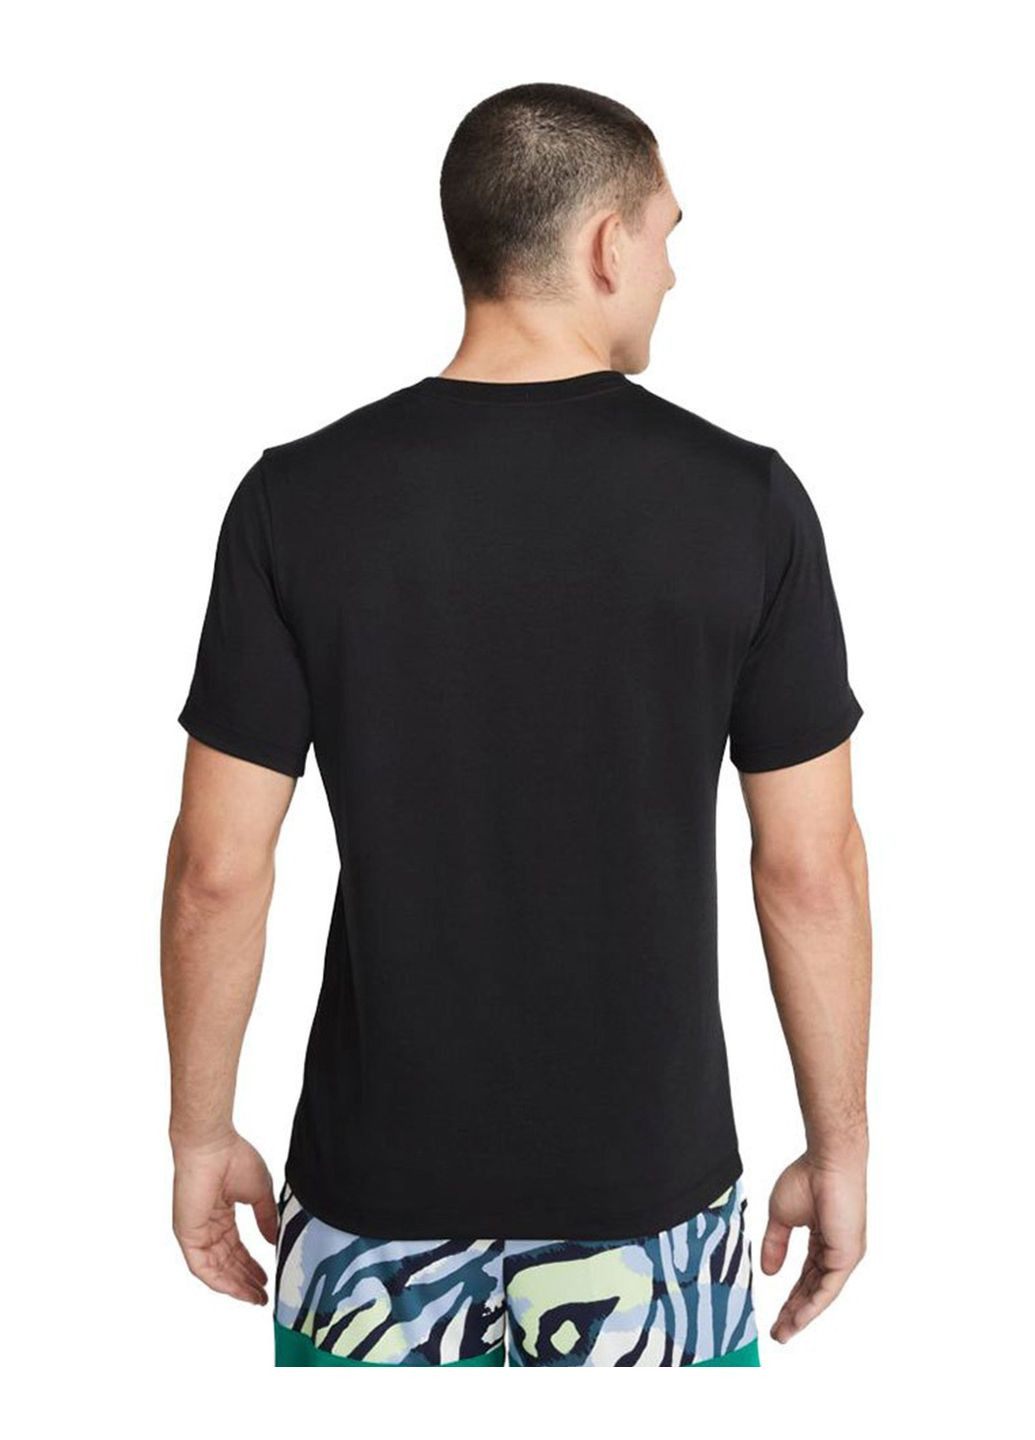 Черная футболка мужская dri-fit park 20 cw6936-010 черная Nike